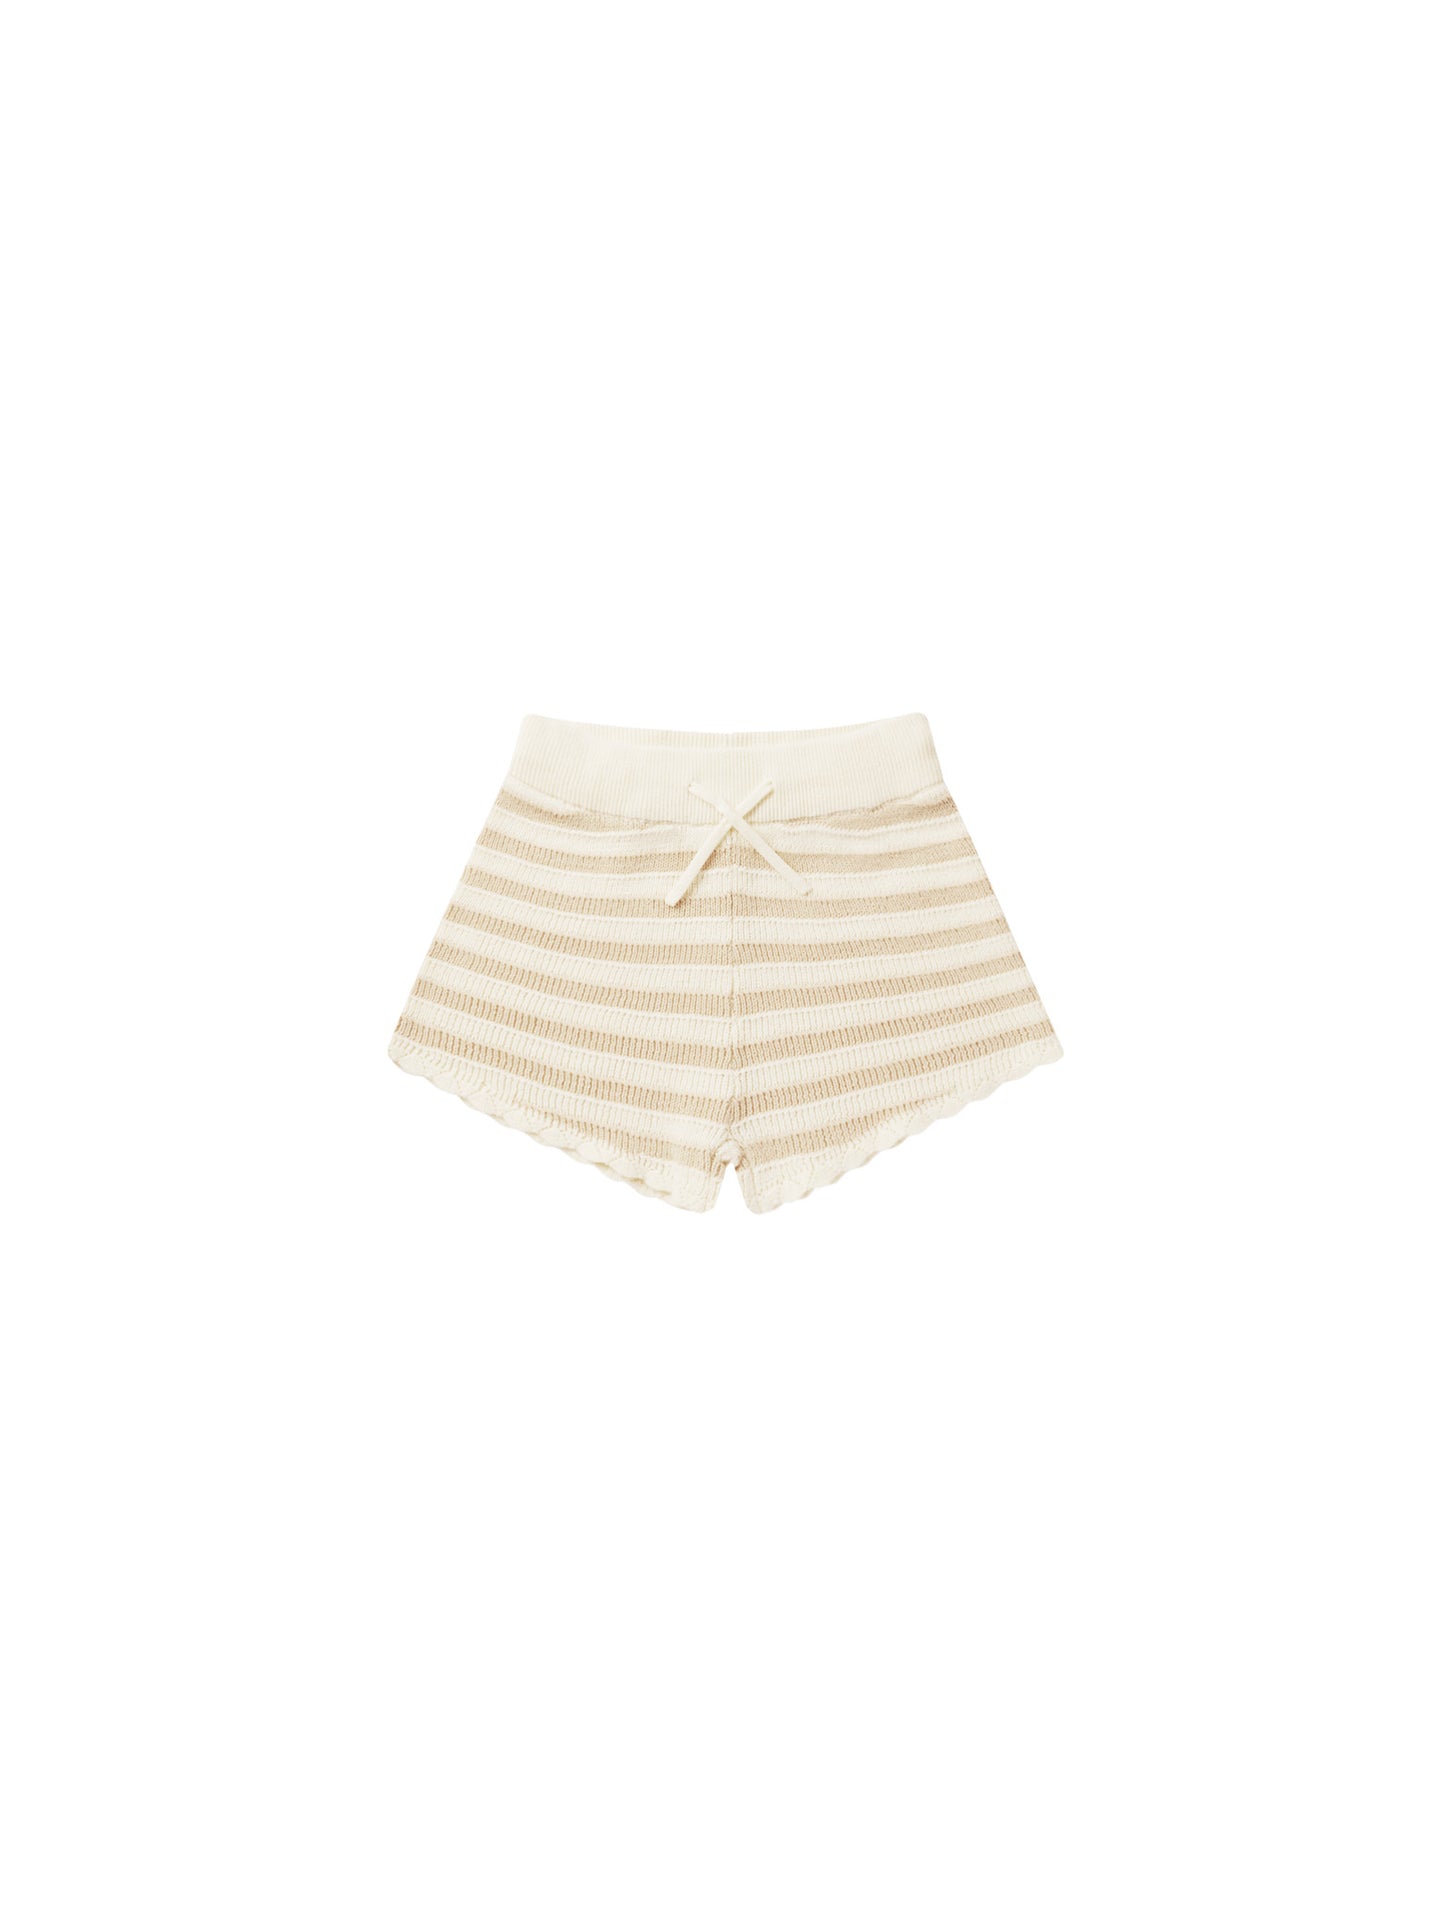 Rylee + Cru - Knit Shorts - Sand Stripe